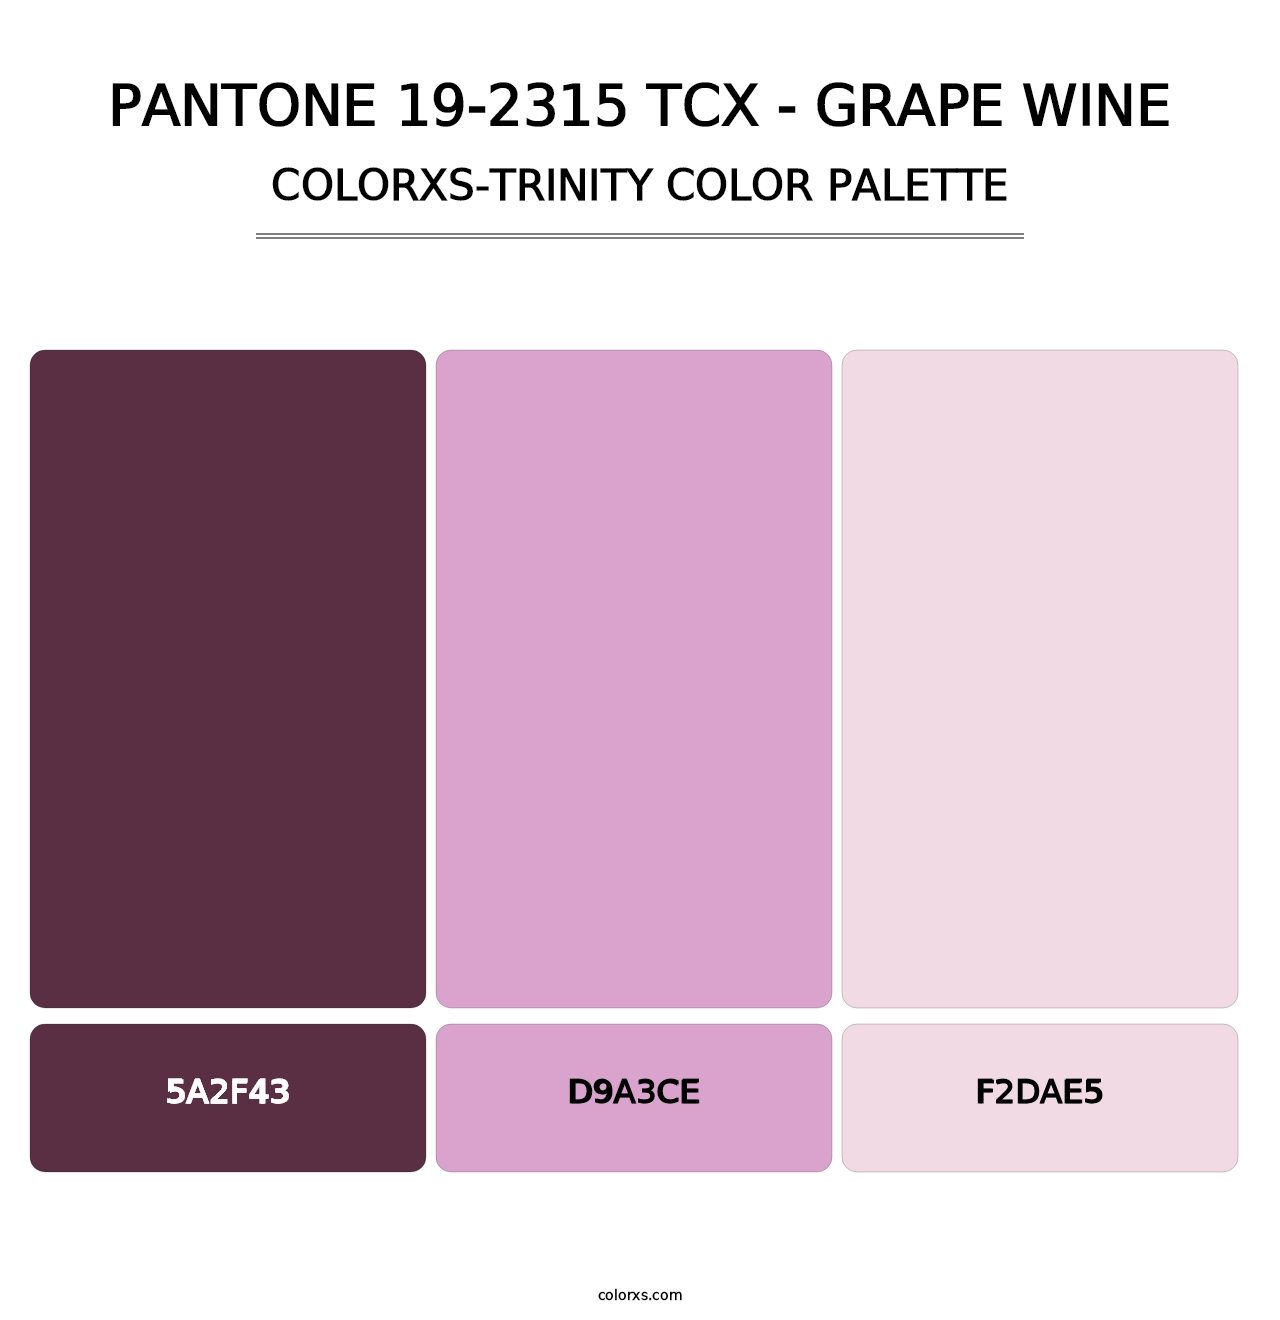 PANTONE 19-2315 TCX - Grape Wine - Colorxs Trinity Palette